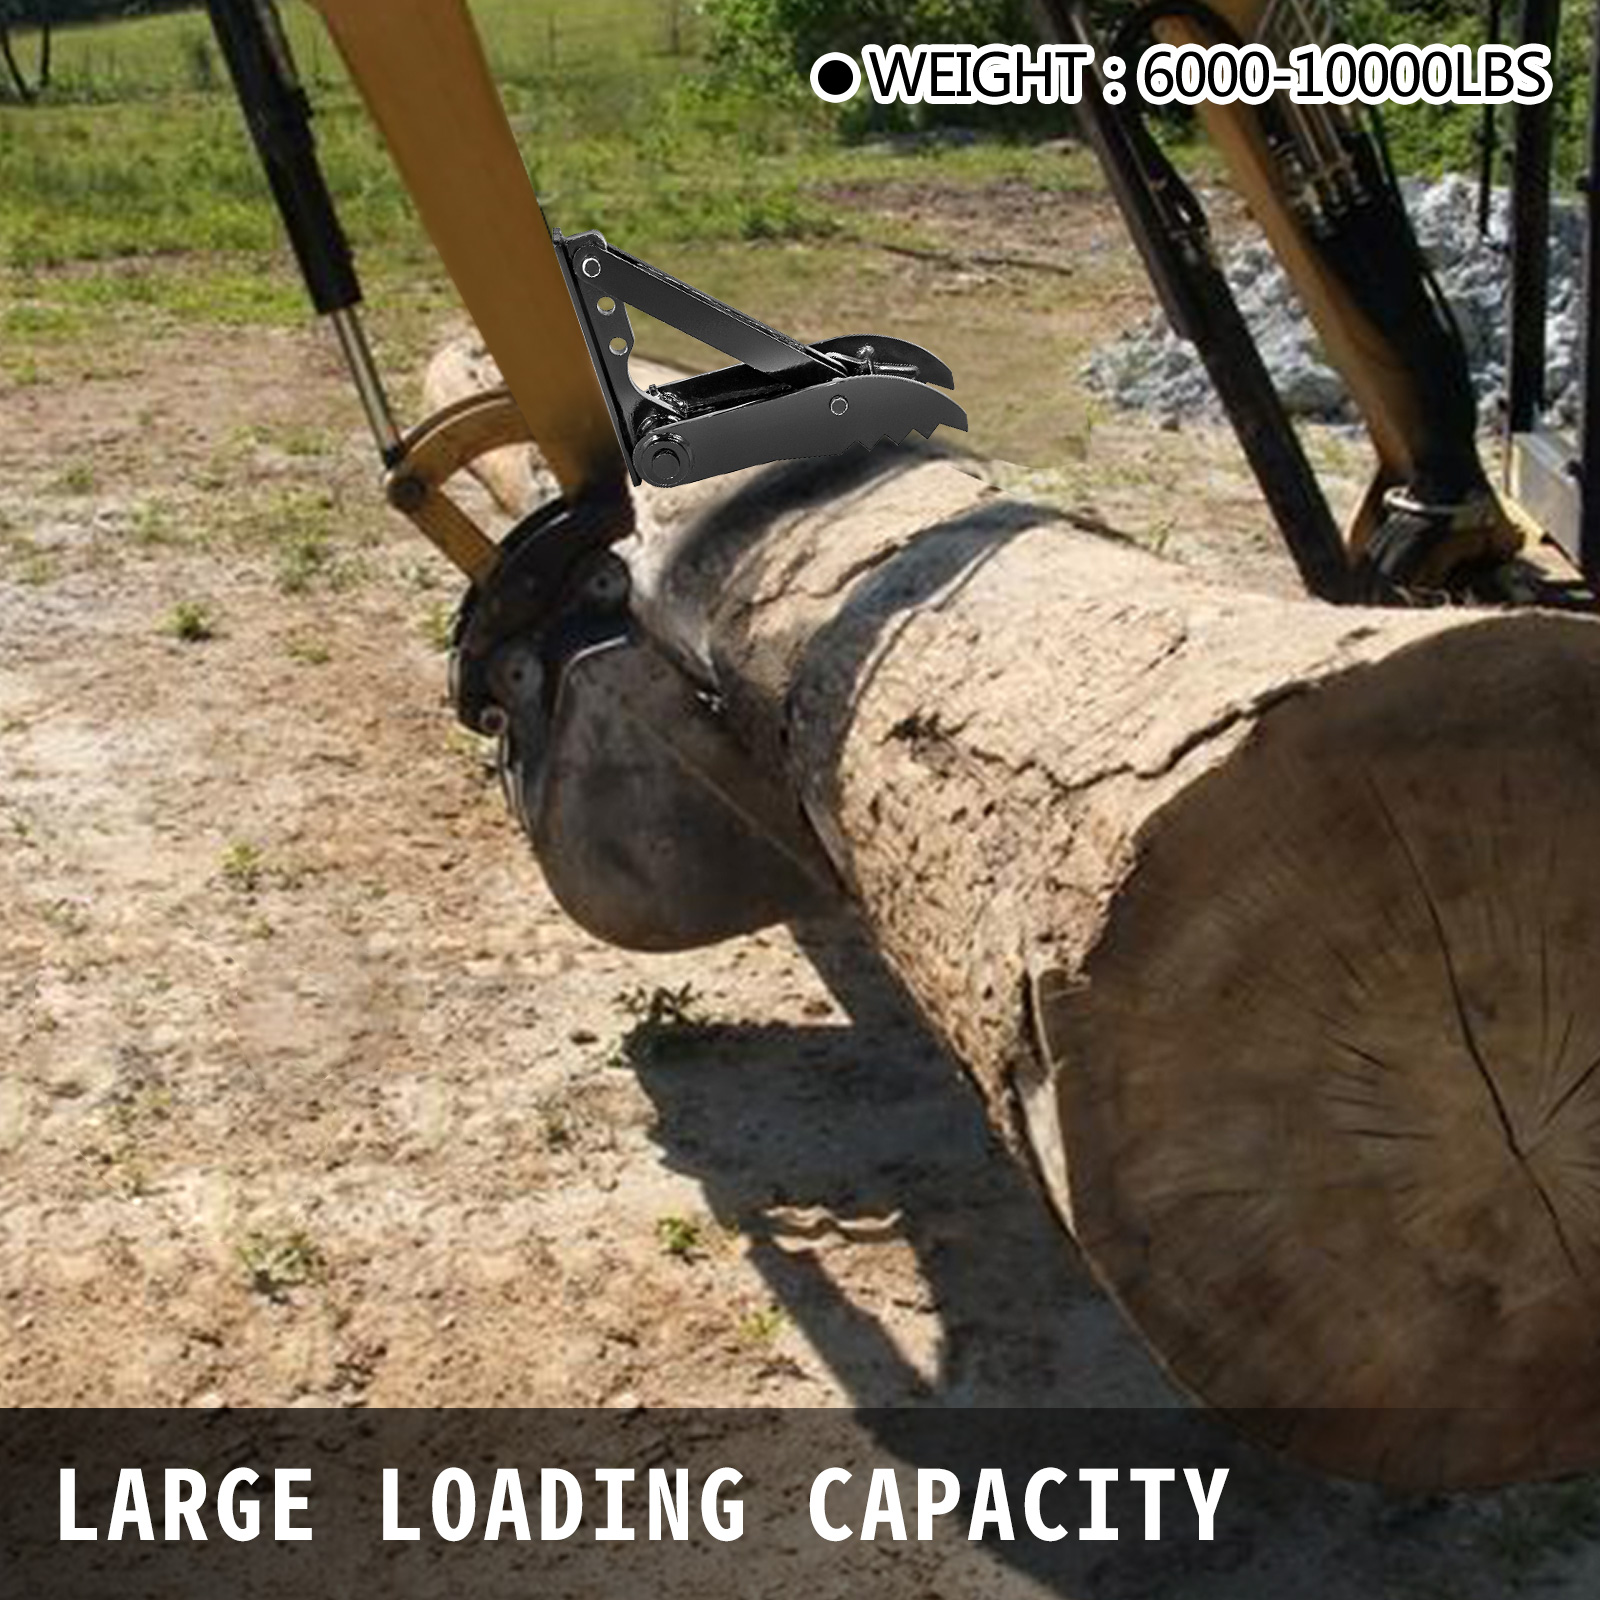 VEVOR Backhoe Thumb Heavy-Duty Excavator Thumb Attach 2-Teeth w/ Large Capacity